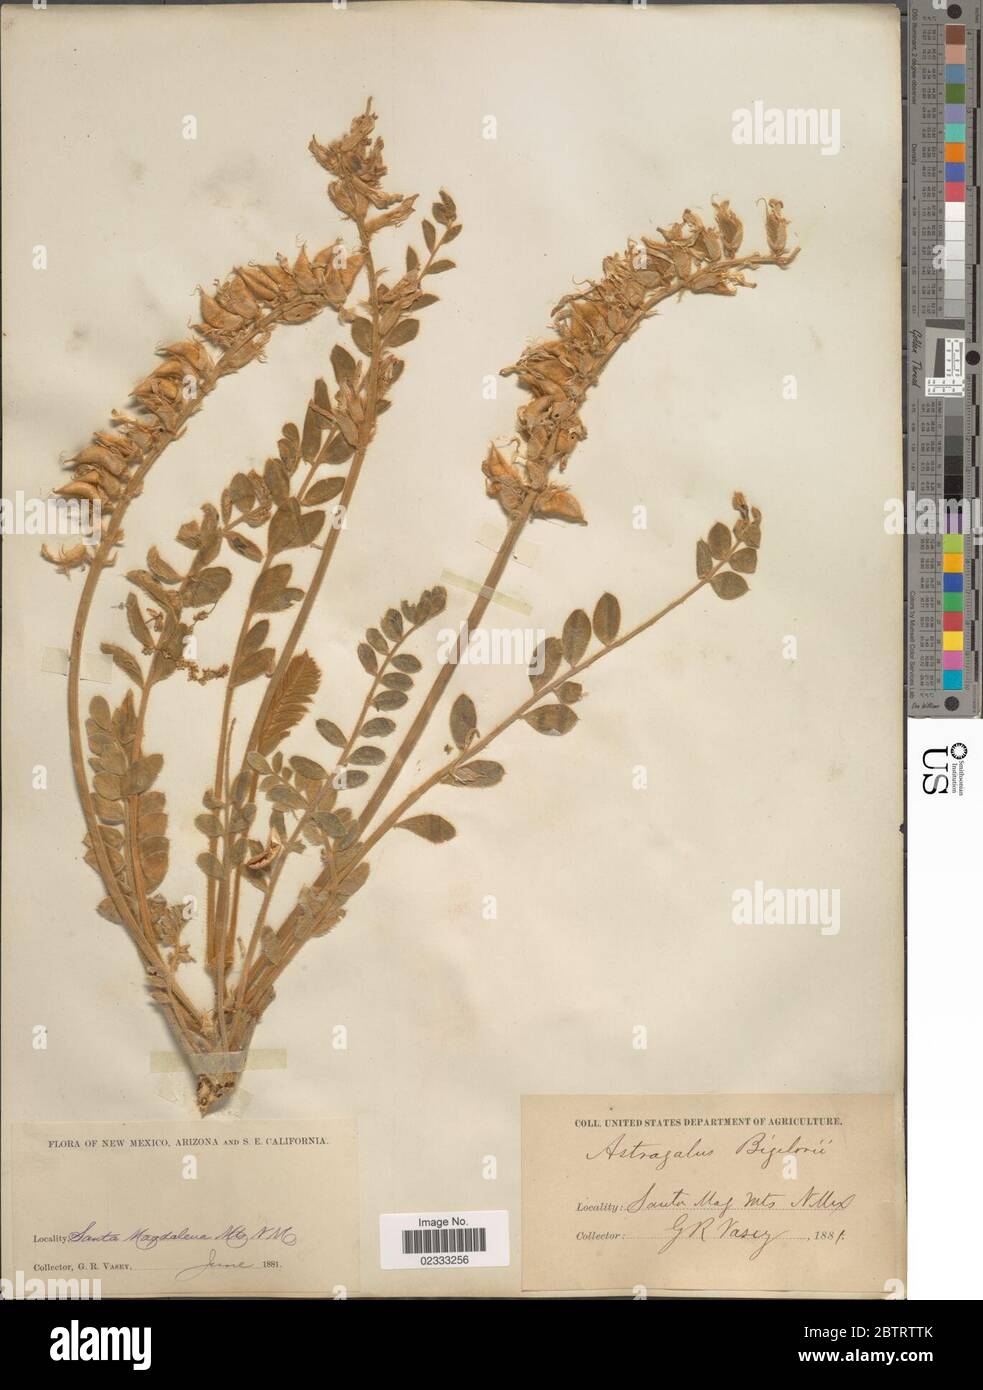 Astragalus mollissimus var bigelovii A Gray Barneby ex BL Turner. Stock Photo